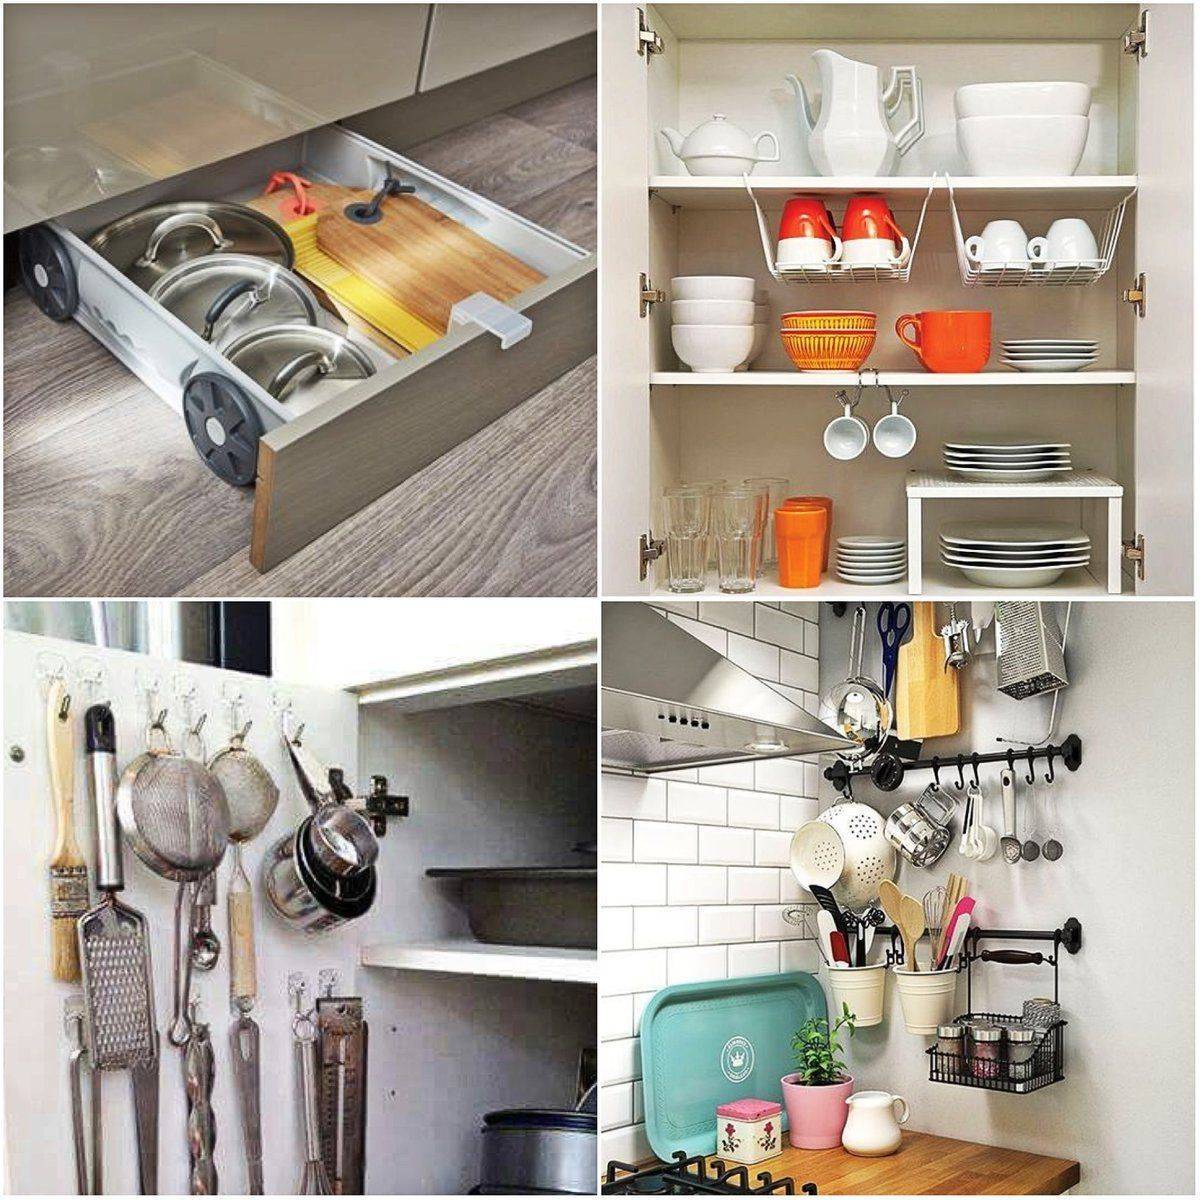 Как навести порядок на кухне, идеи хранения кухонной утвари, продуктов и аксессуаров - 24 фото